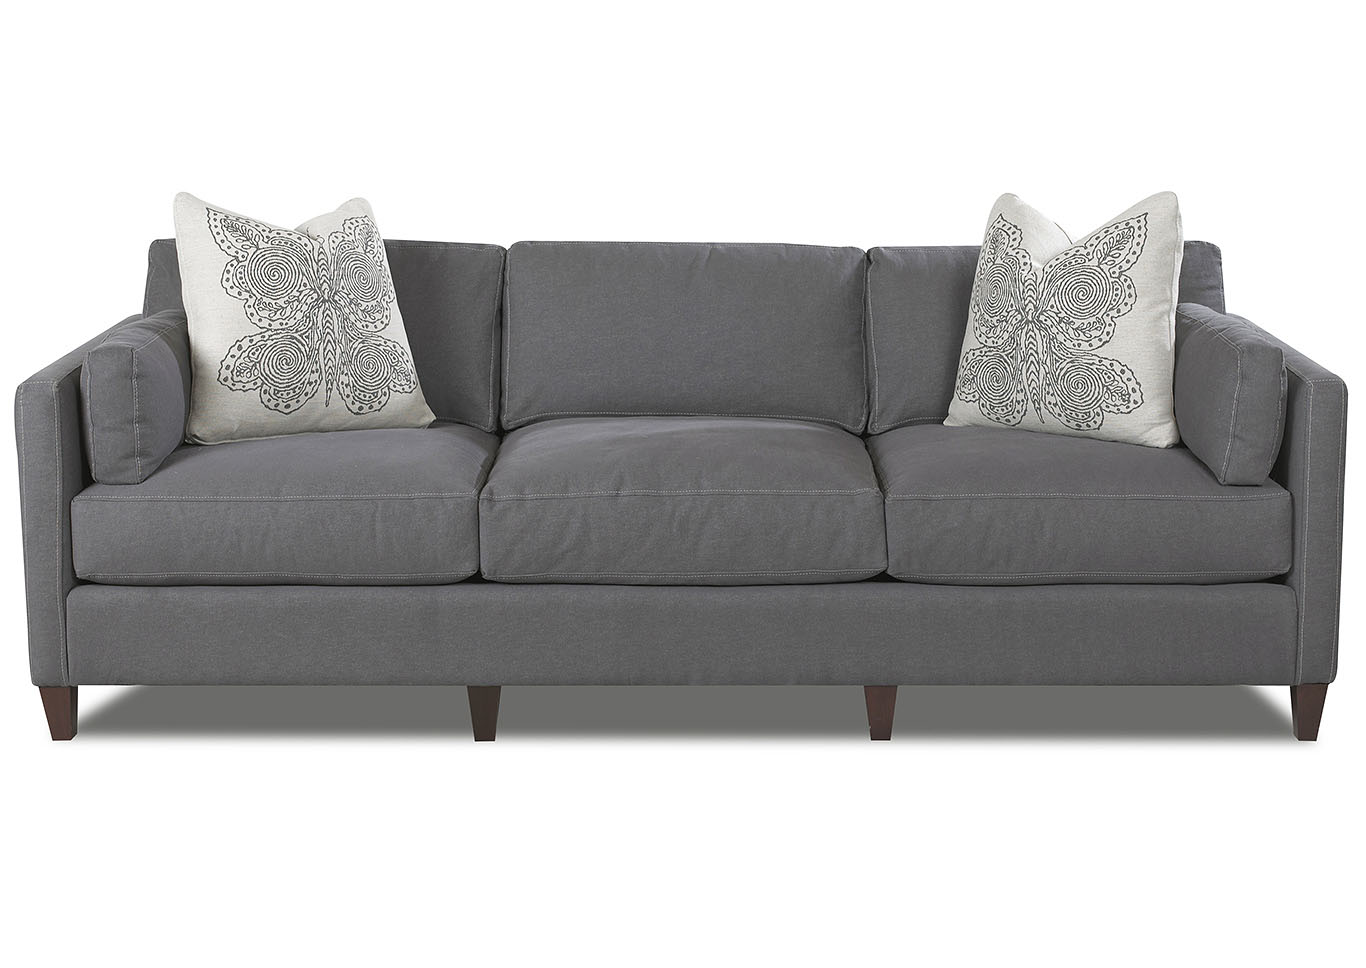 Jordan Classic Gray Stationary Fabric Sofa,Klaussner Home Furnishings